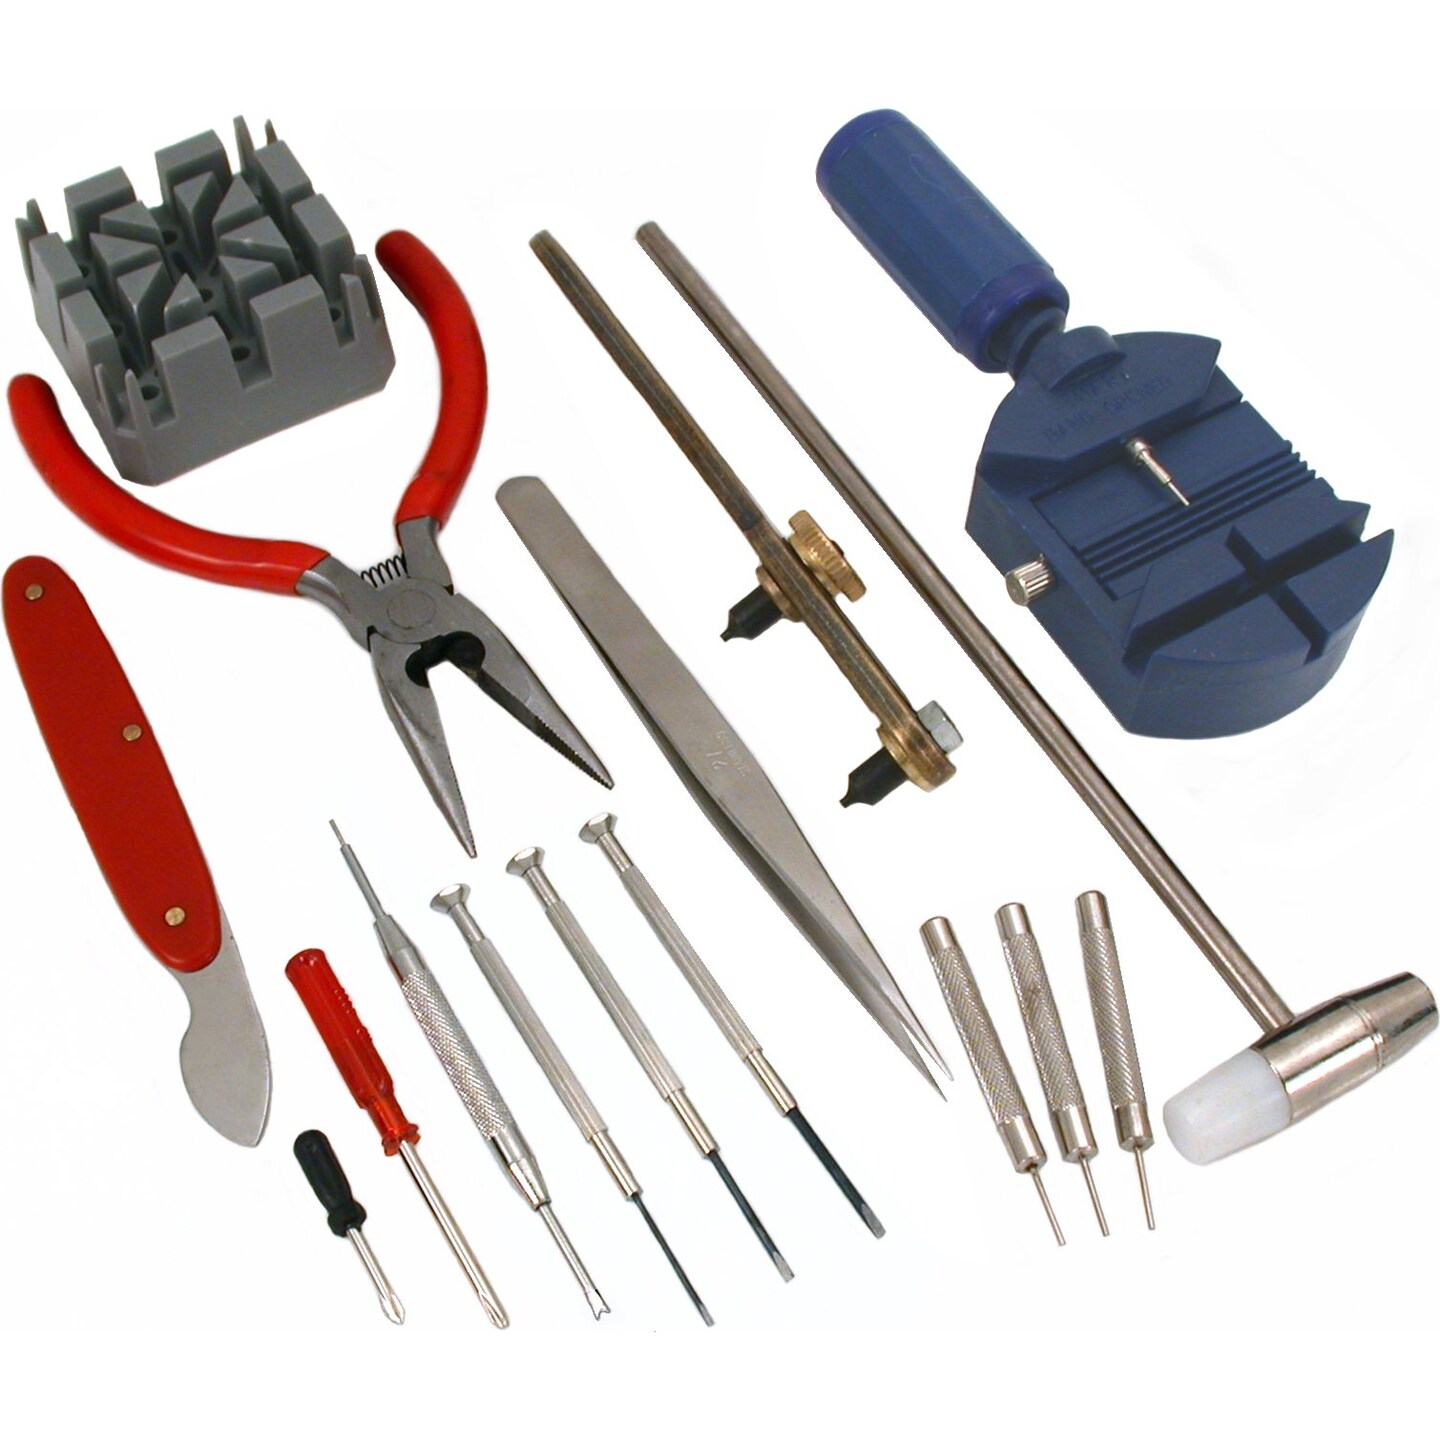 Watch Repair Tools and Supplies — widgetsupply.com